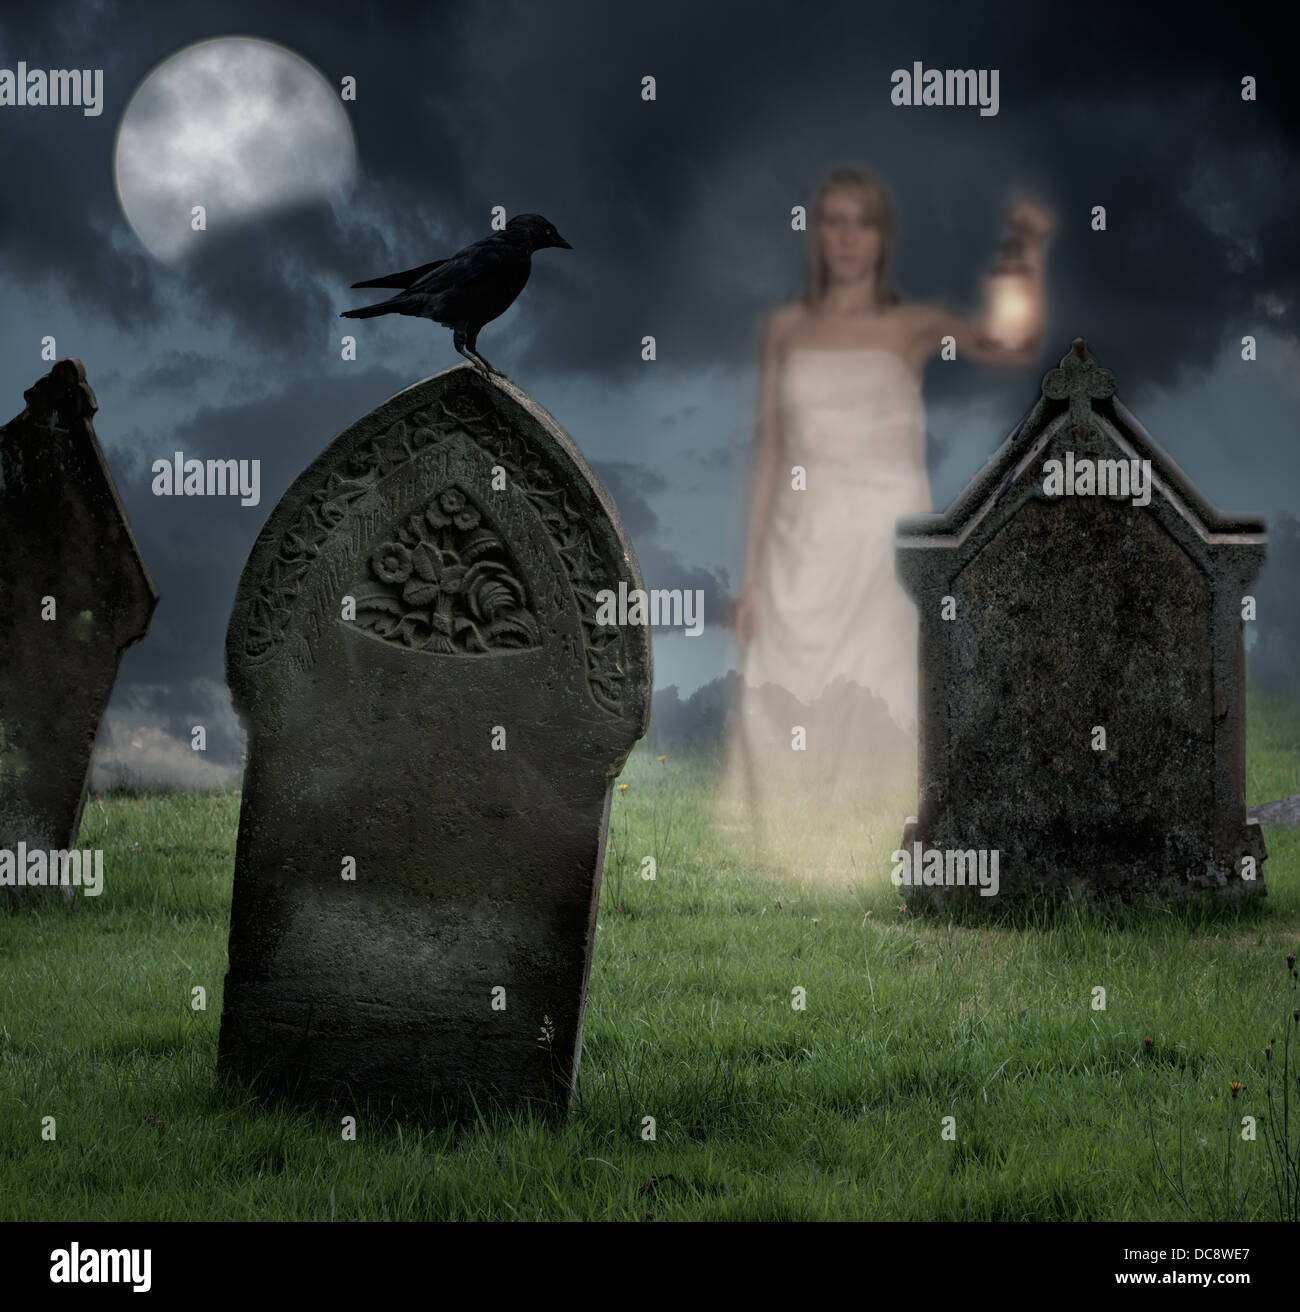 Woman holding lantern haunts cemetery at Halloween Stock Photo